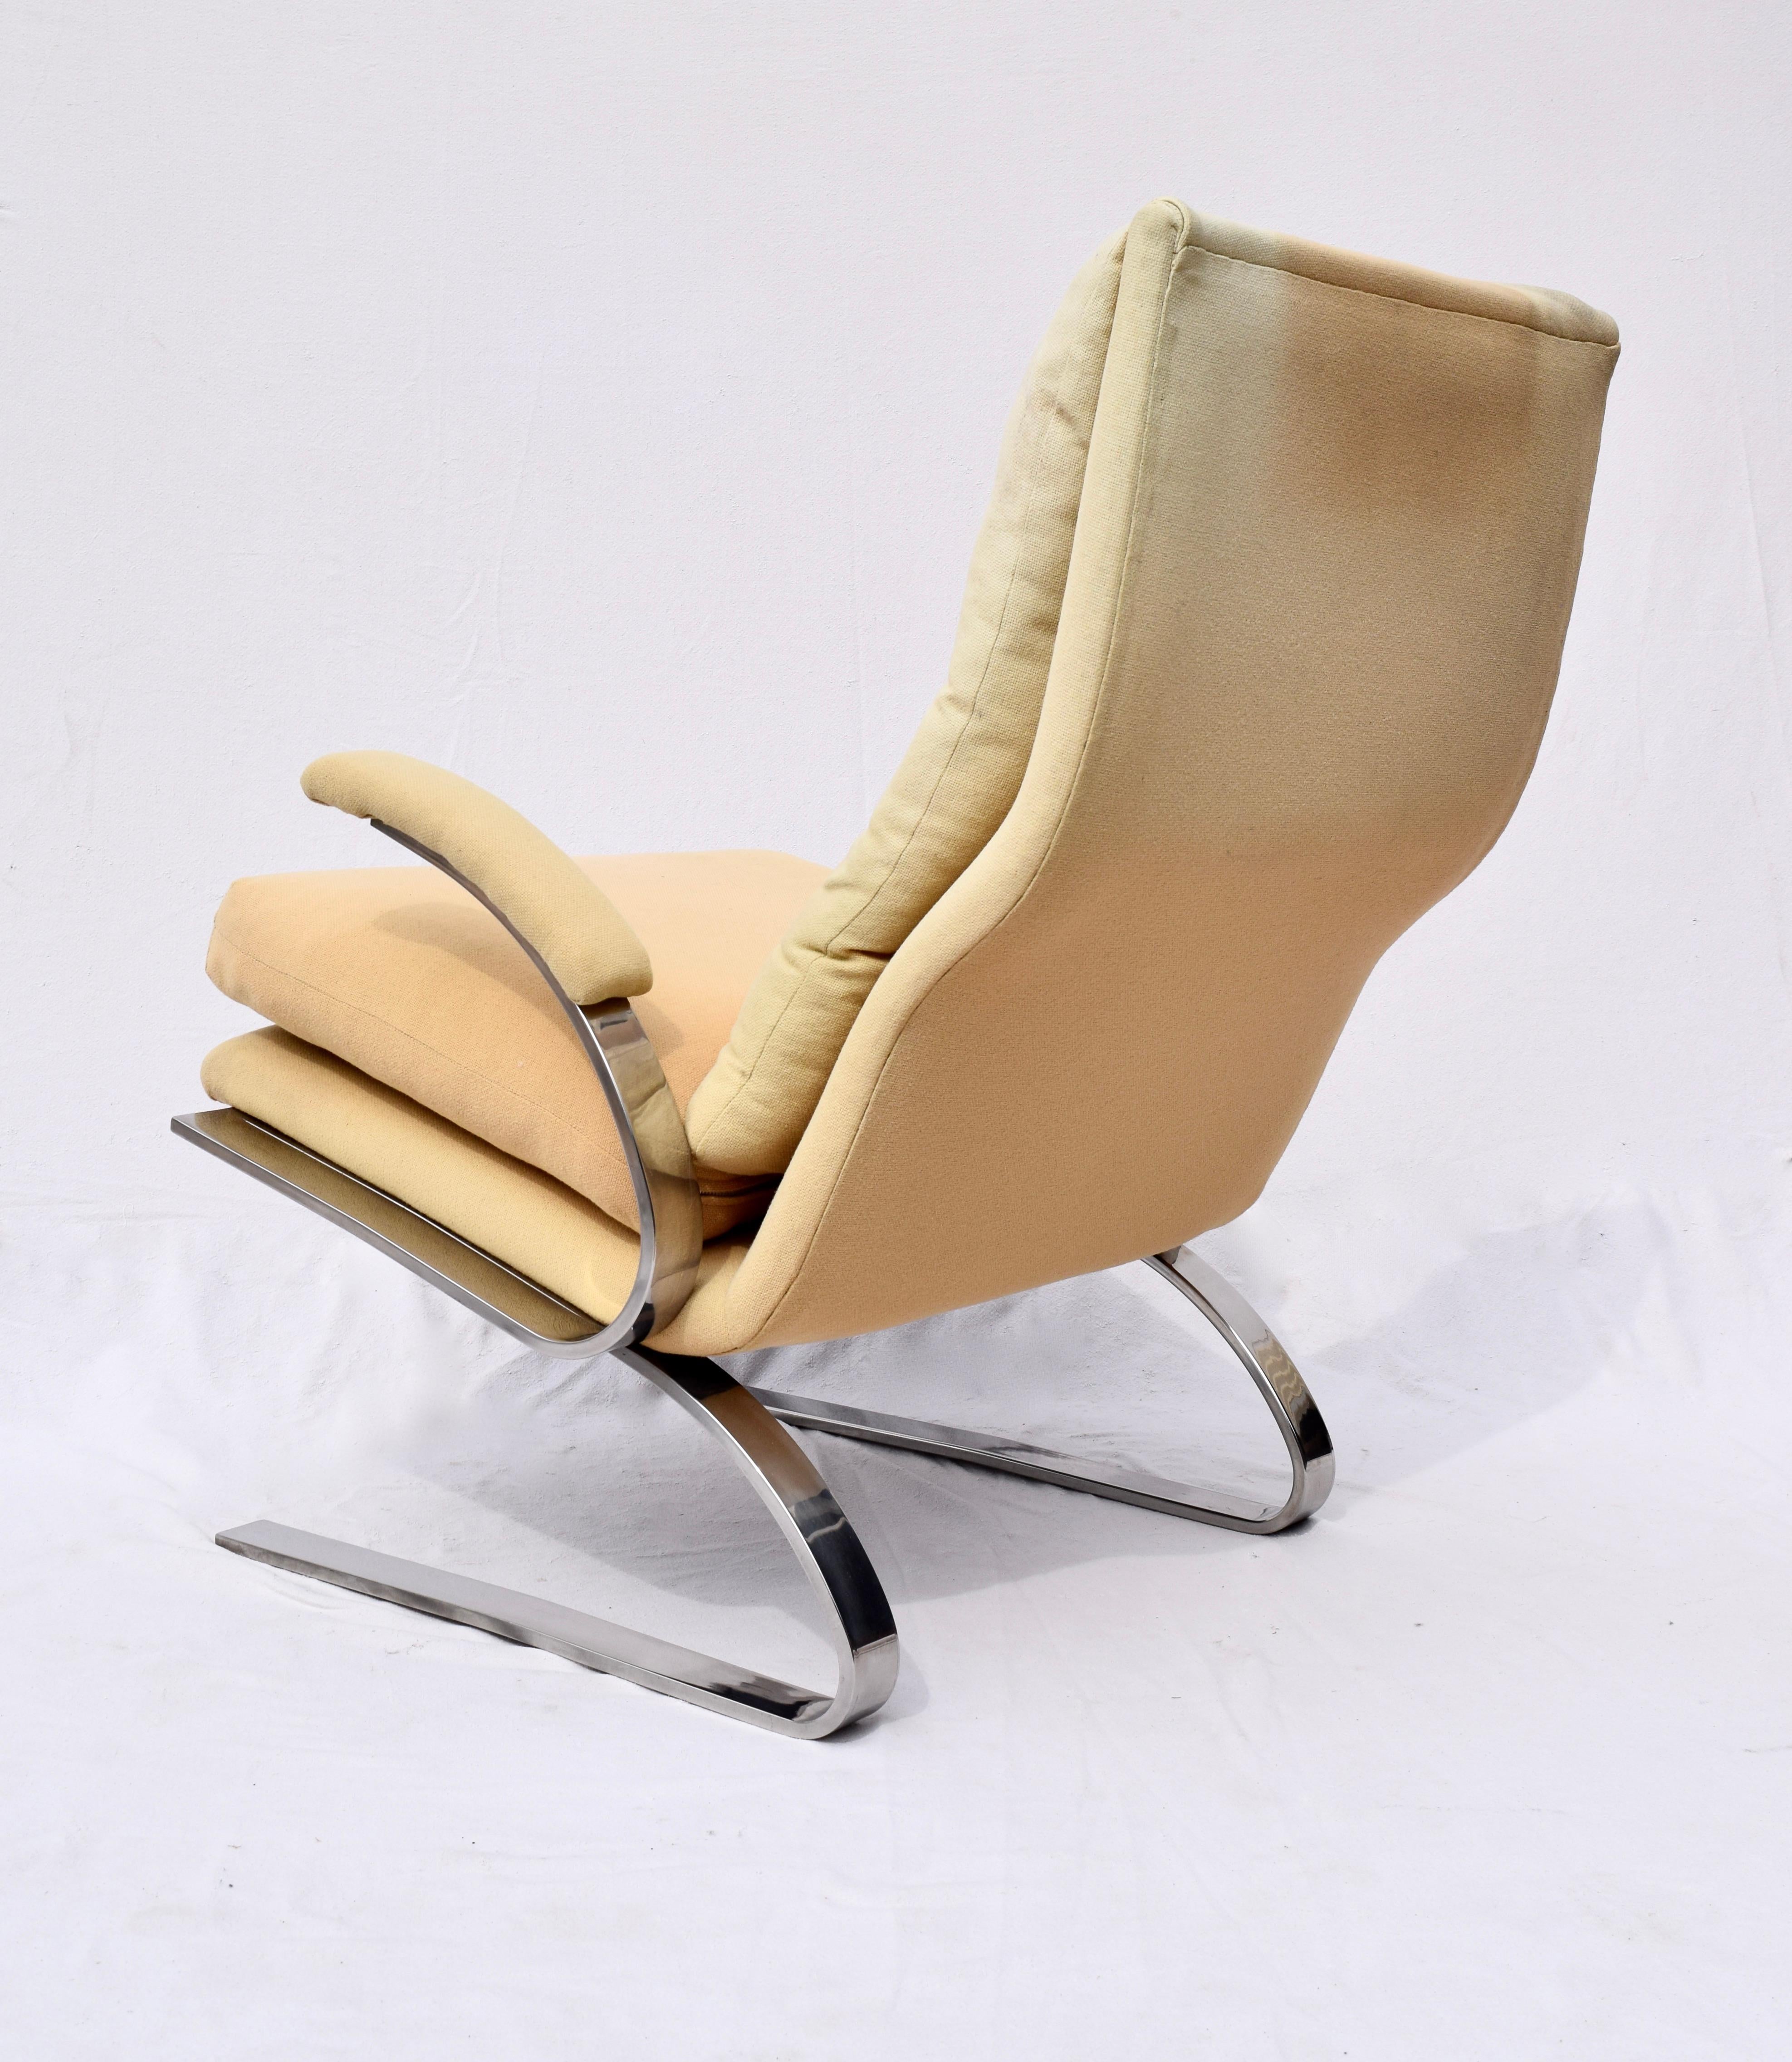 Late 20th Century Milo Baughman for Thayer Coggin Chrome Lounge Chair and Ottoman, USA, 1970s